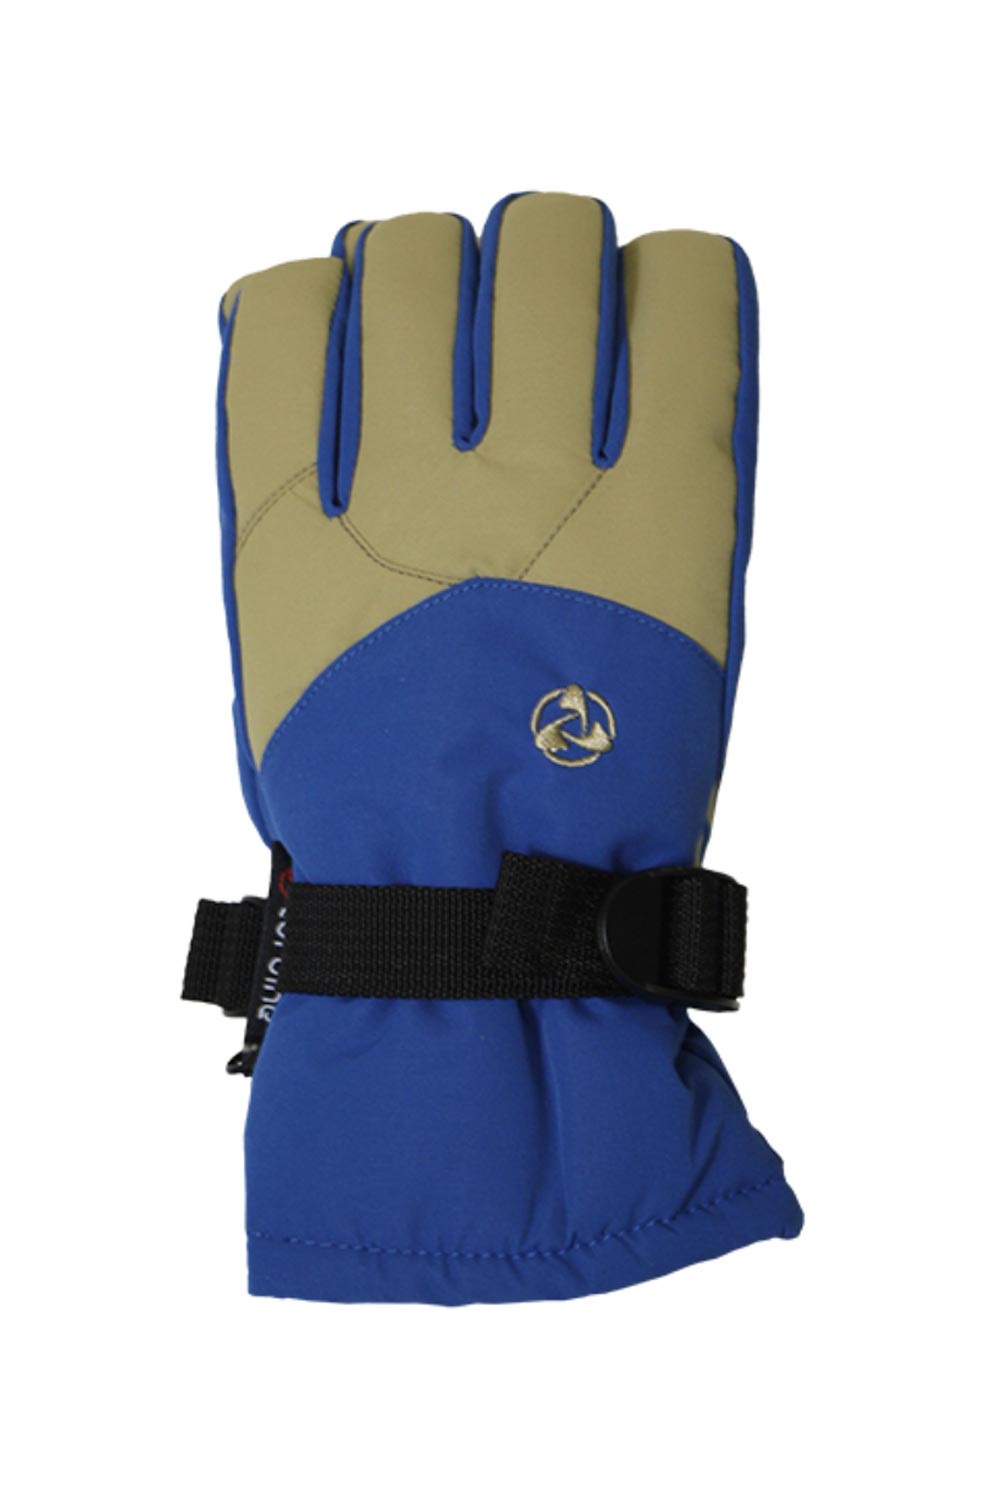 Boys'  Turbine Blazer ski gloves, blue and tan